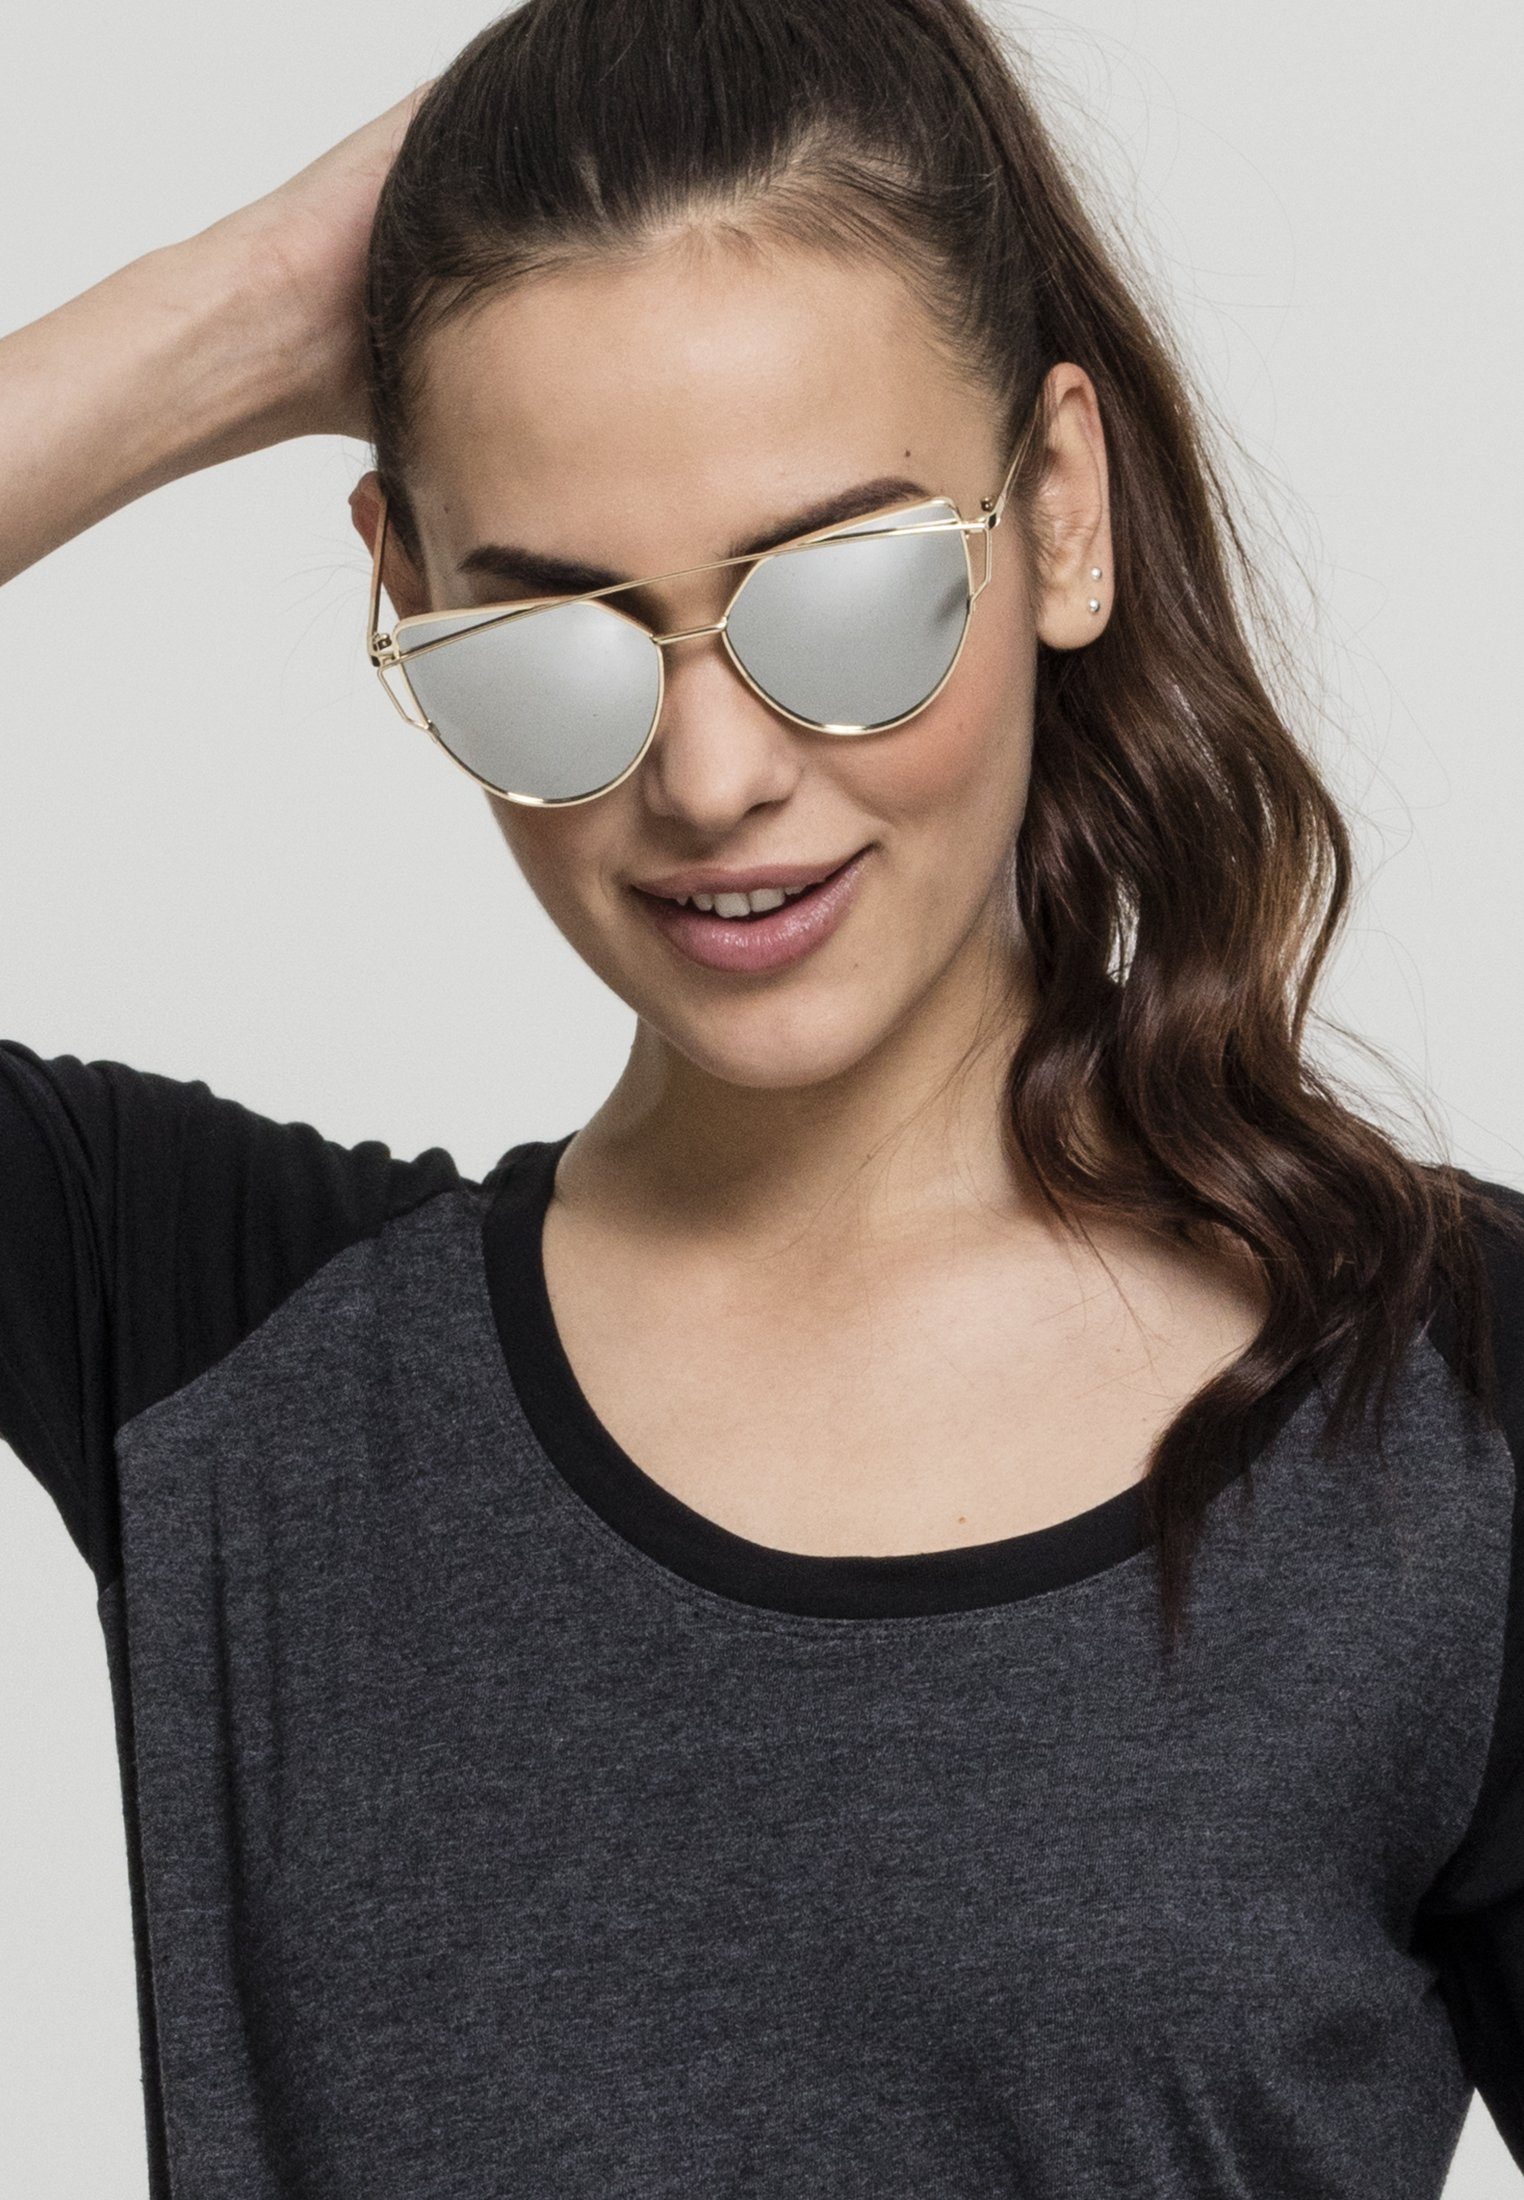 MSTRDS Sonnenbrille Accessoires Sunglasses July gold